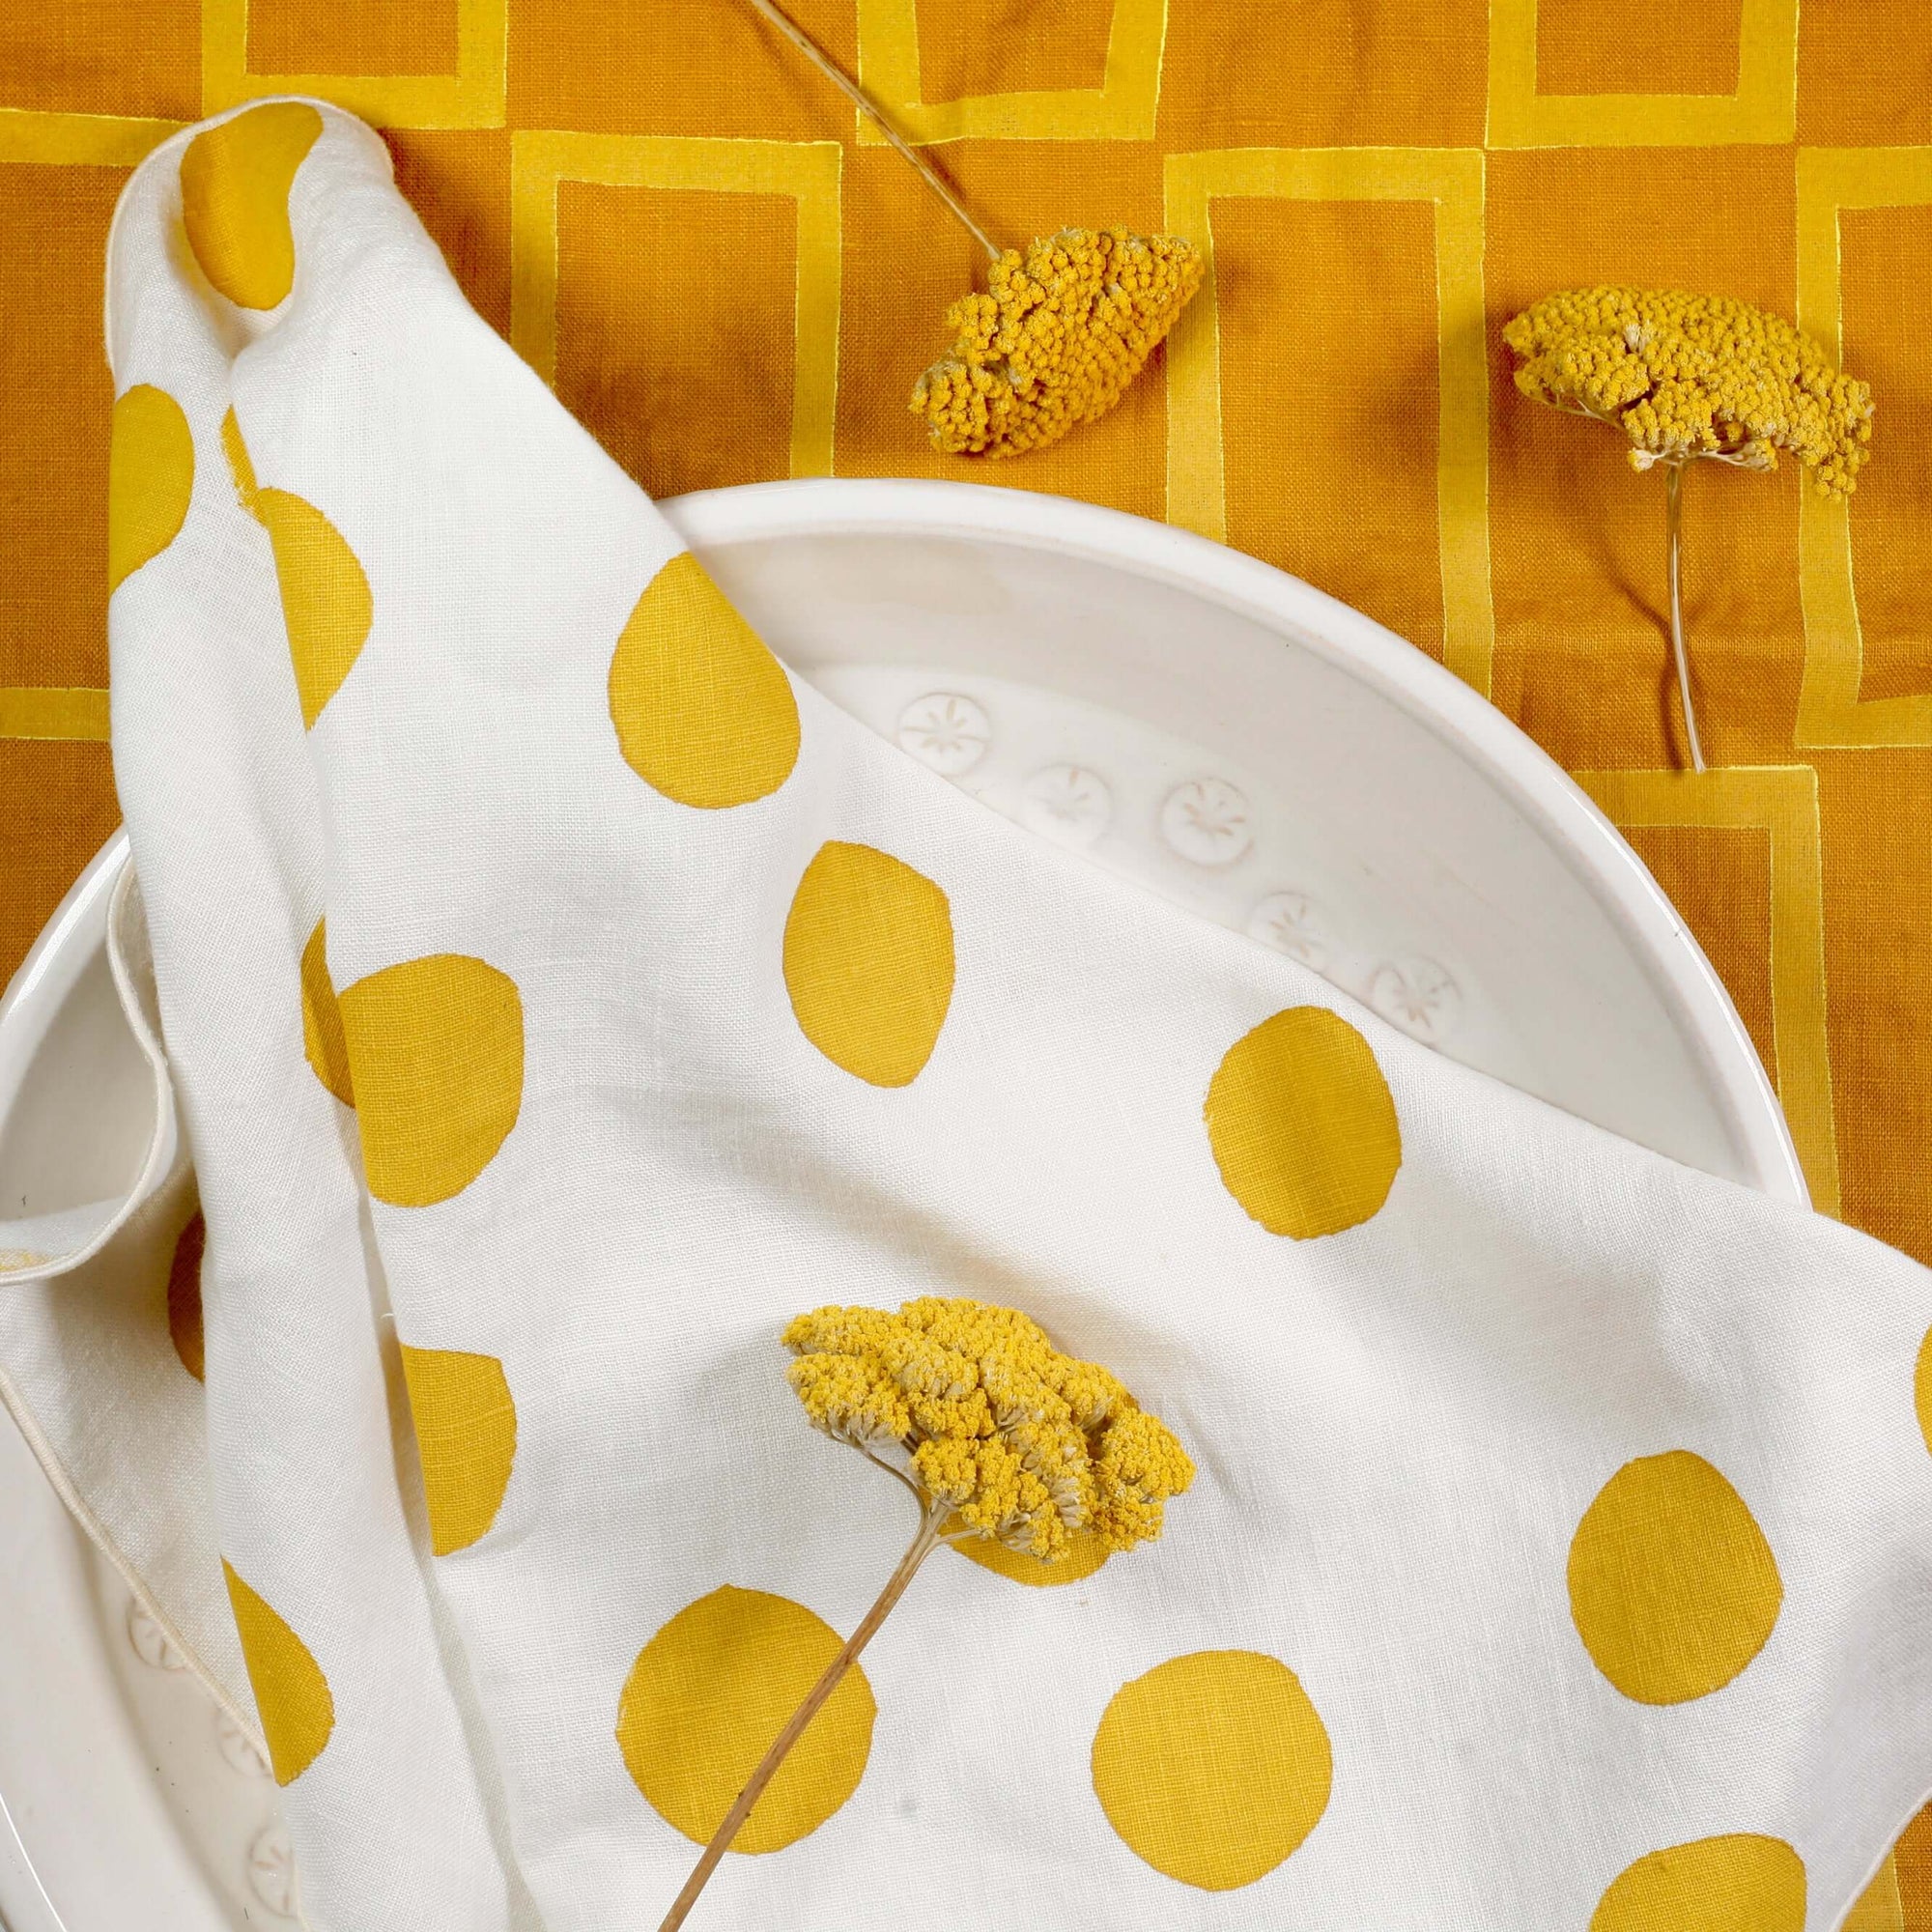 'Scatter' Hand-Printed 100% Linen Tea Towel in Sunshine colorway